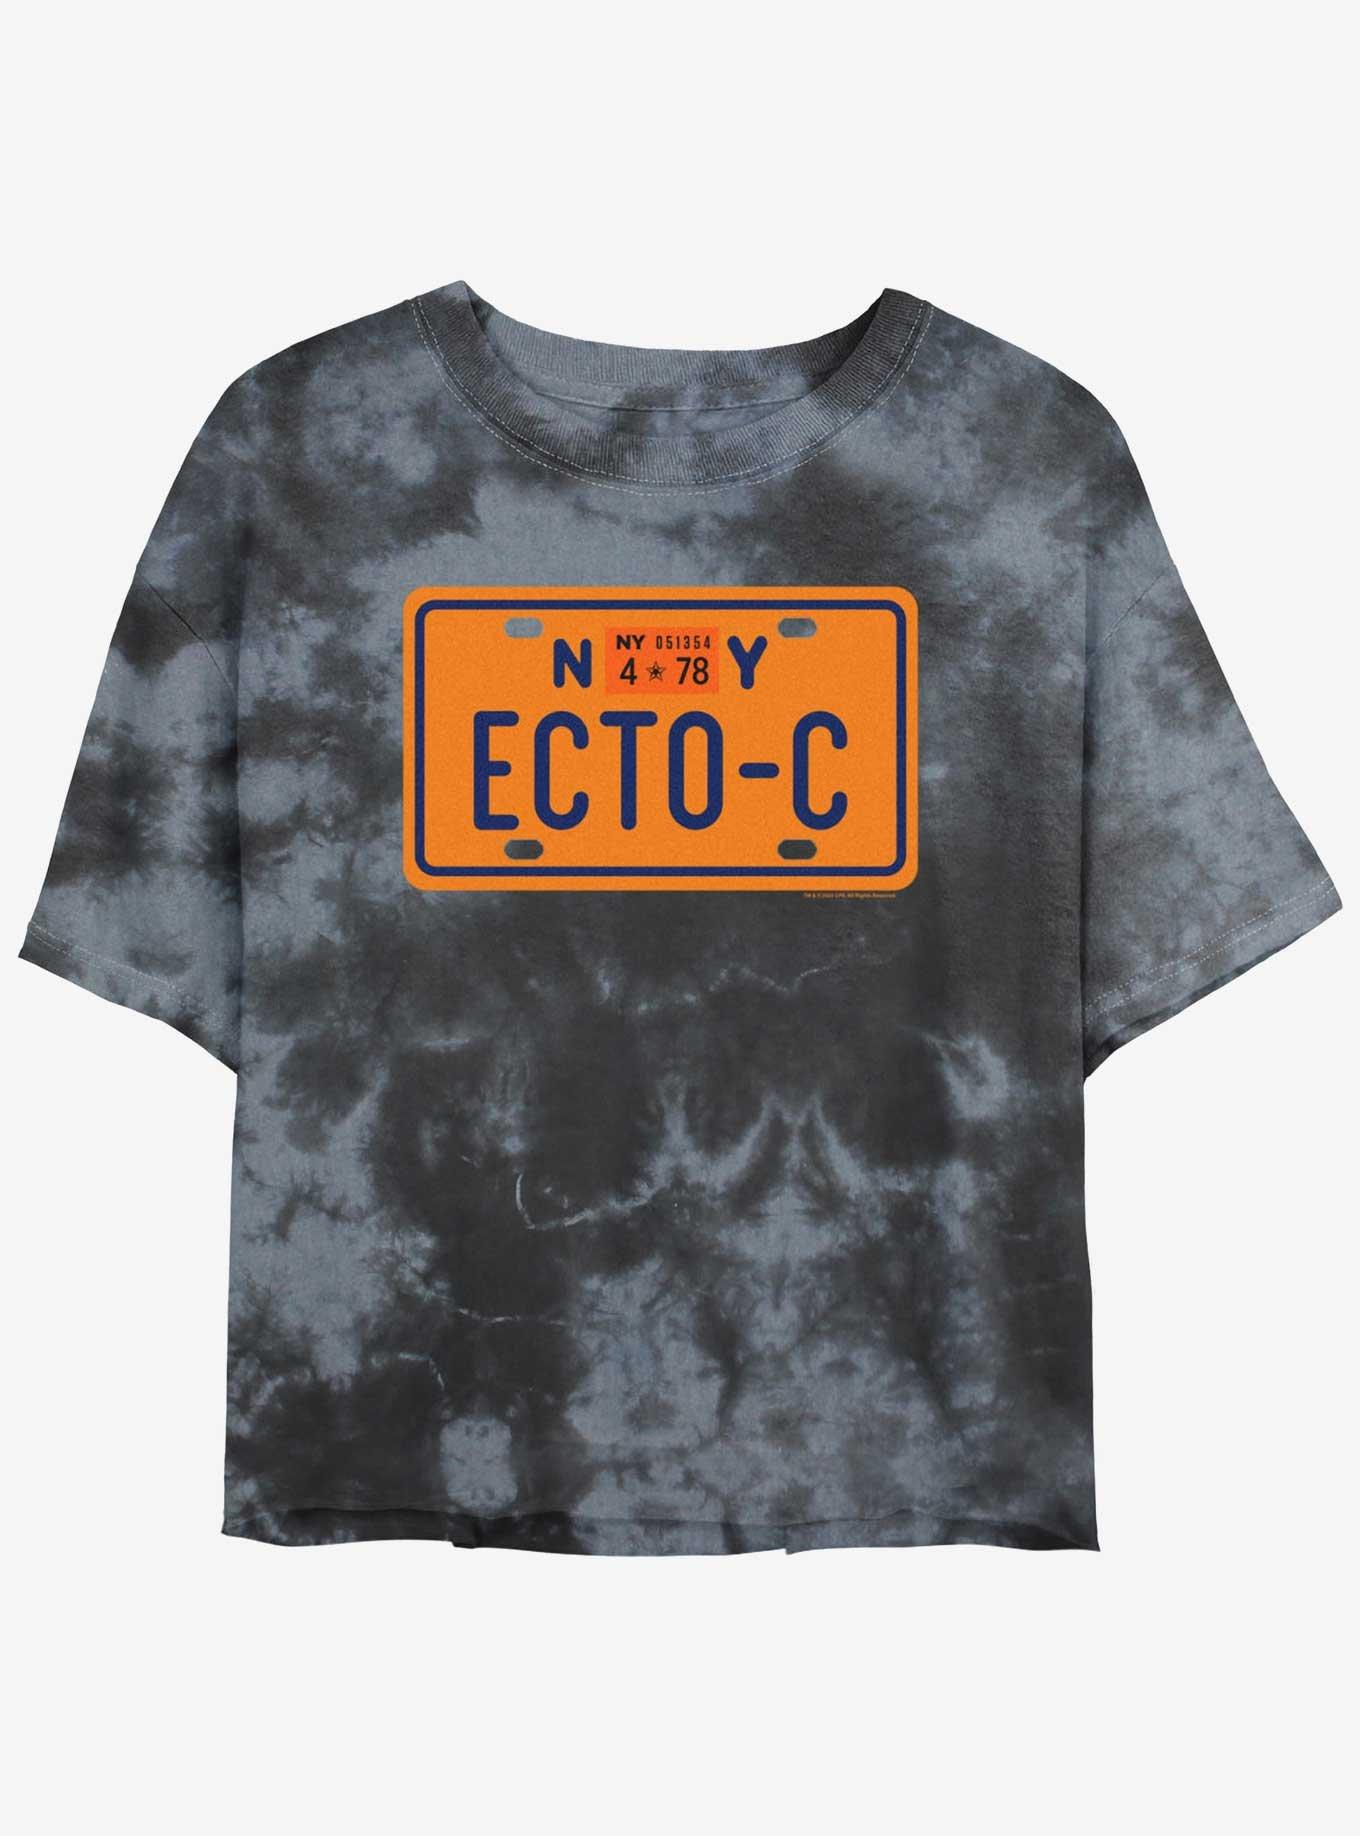 Ghostbusters: Frozen Empire ECTO-C Plates Girls Tie-Dye Crop T-Shirt